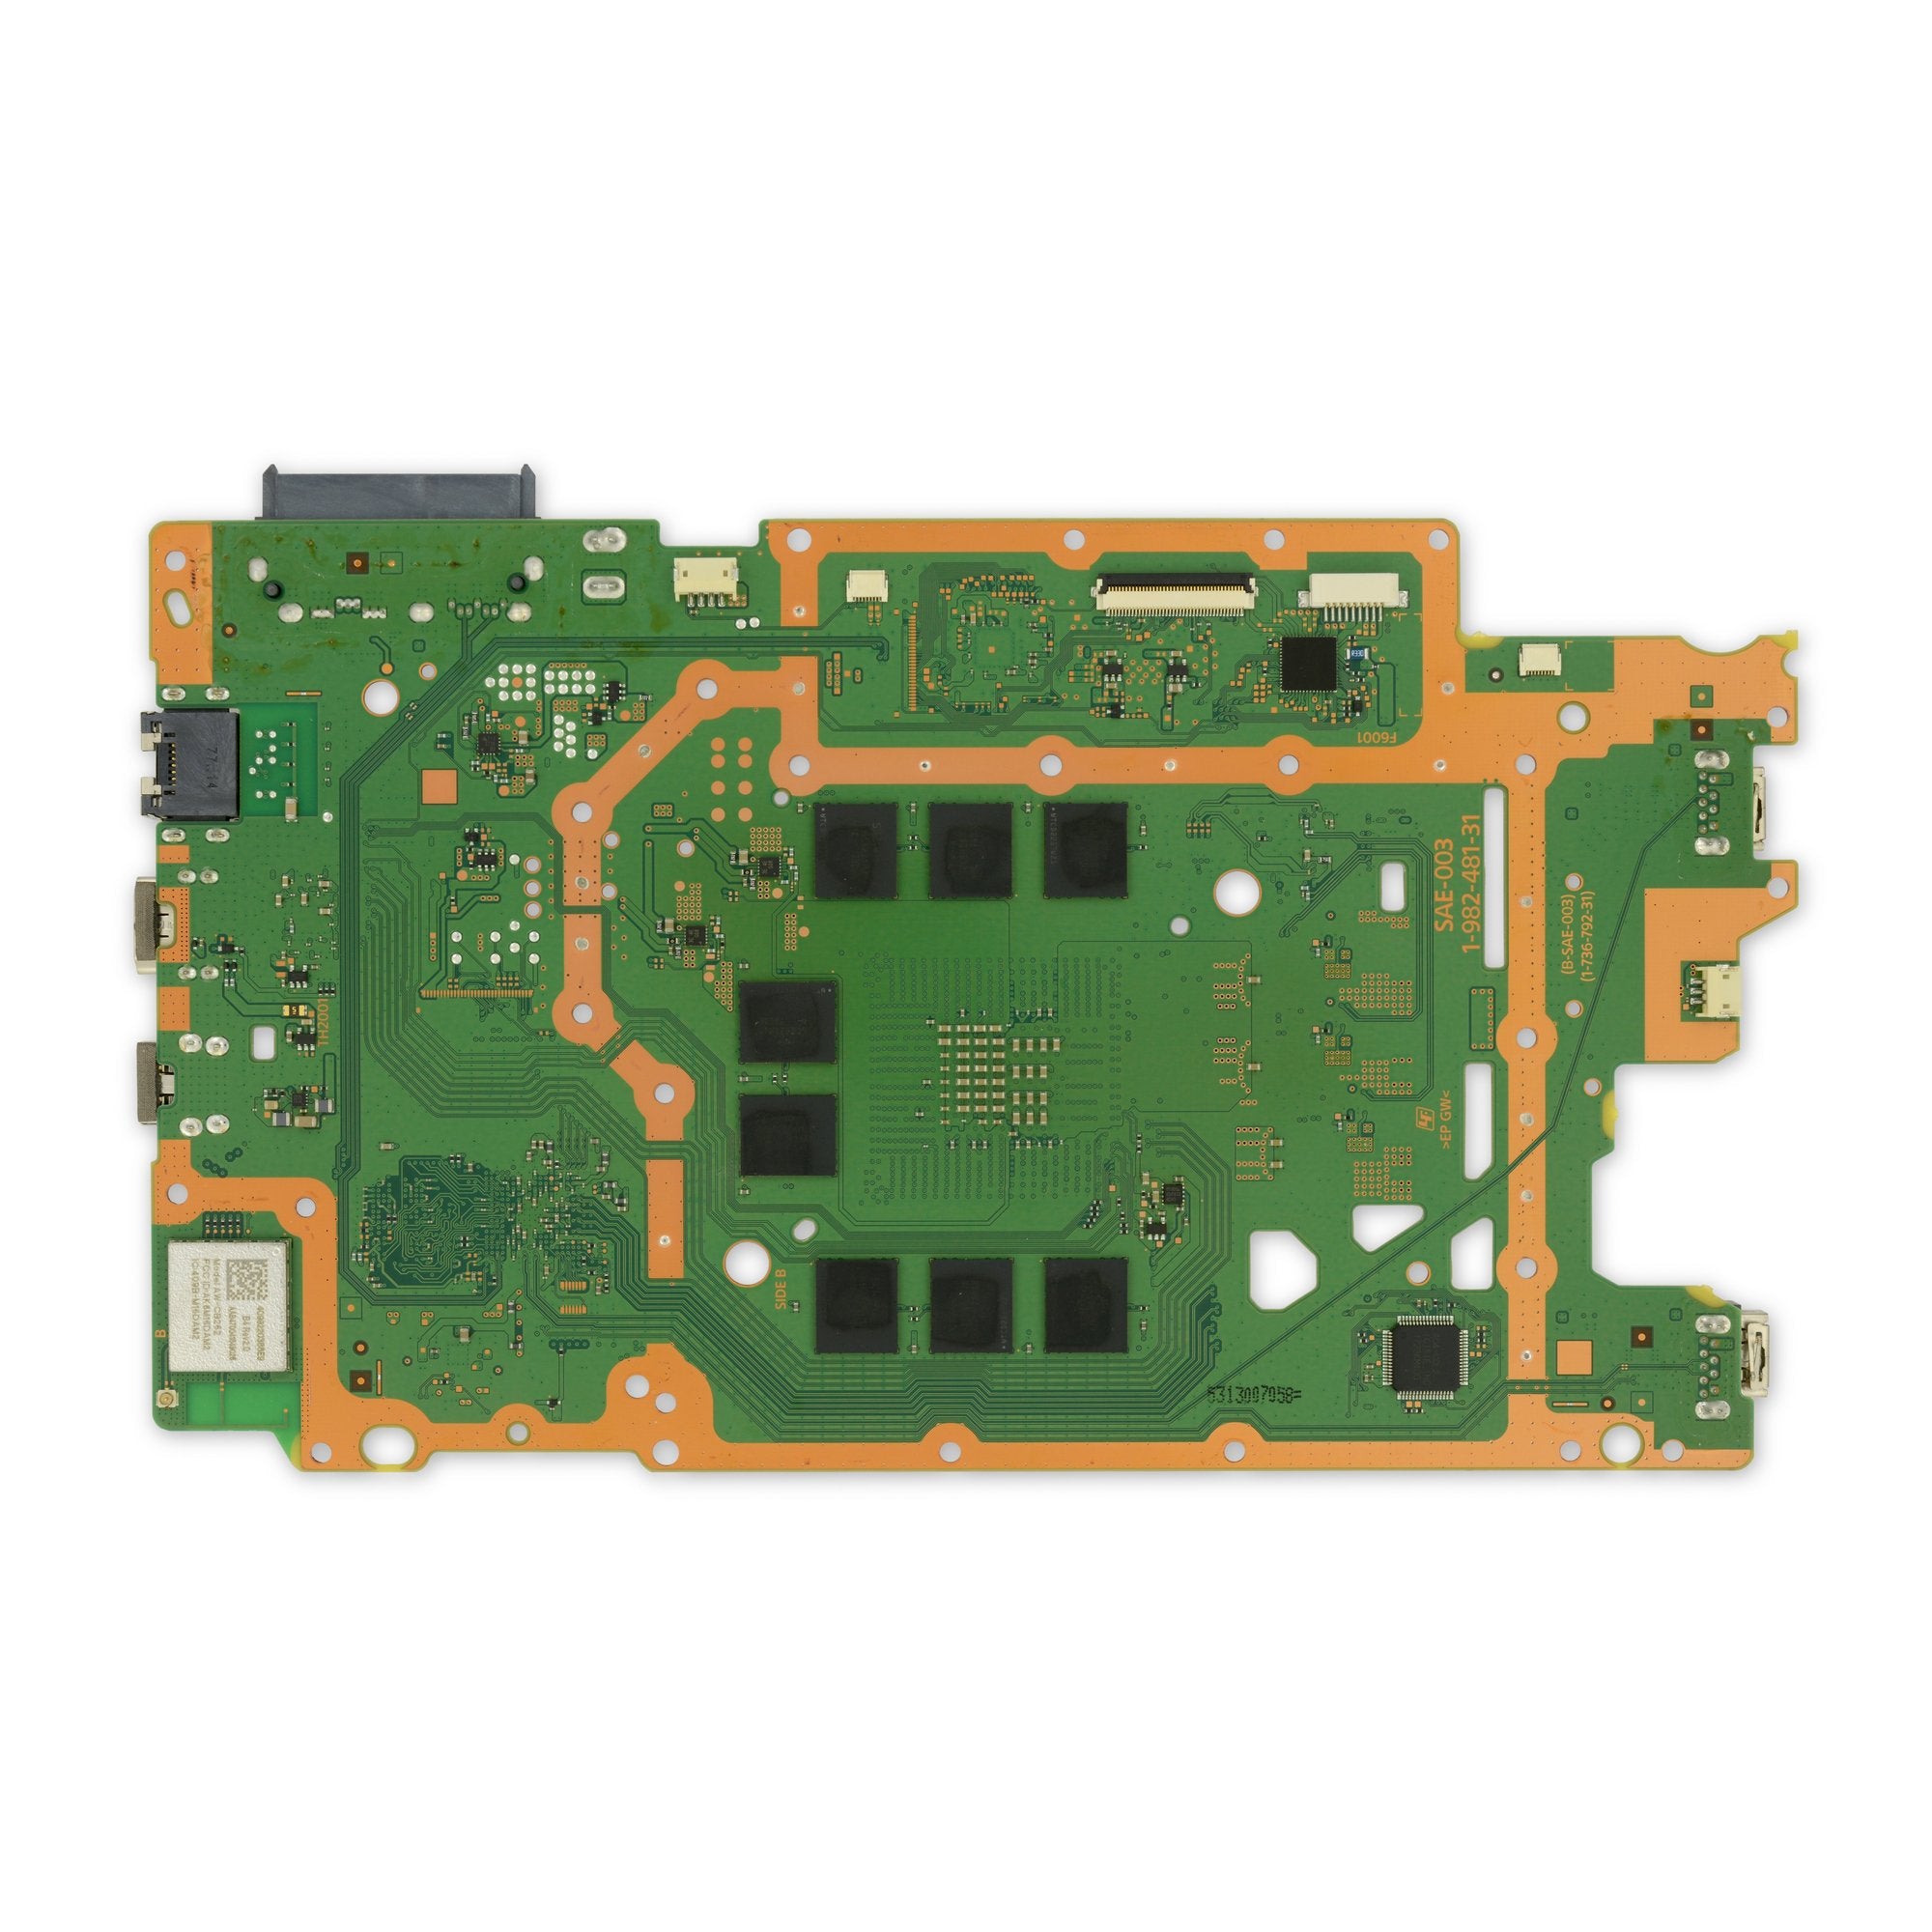 PlayStation 4 Slim (CUH-21xx) Motherboard (SAE-00x) Used SAE-003